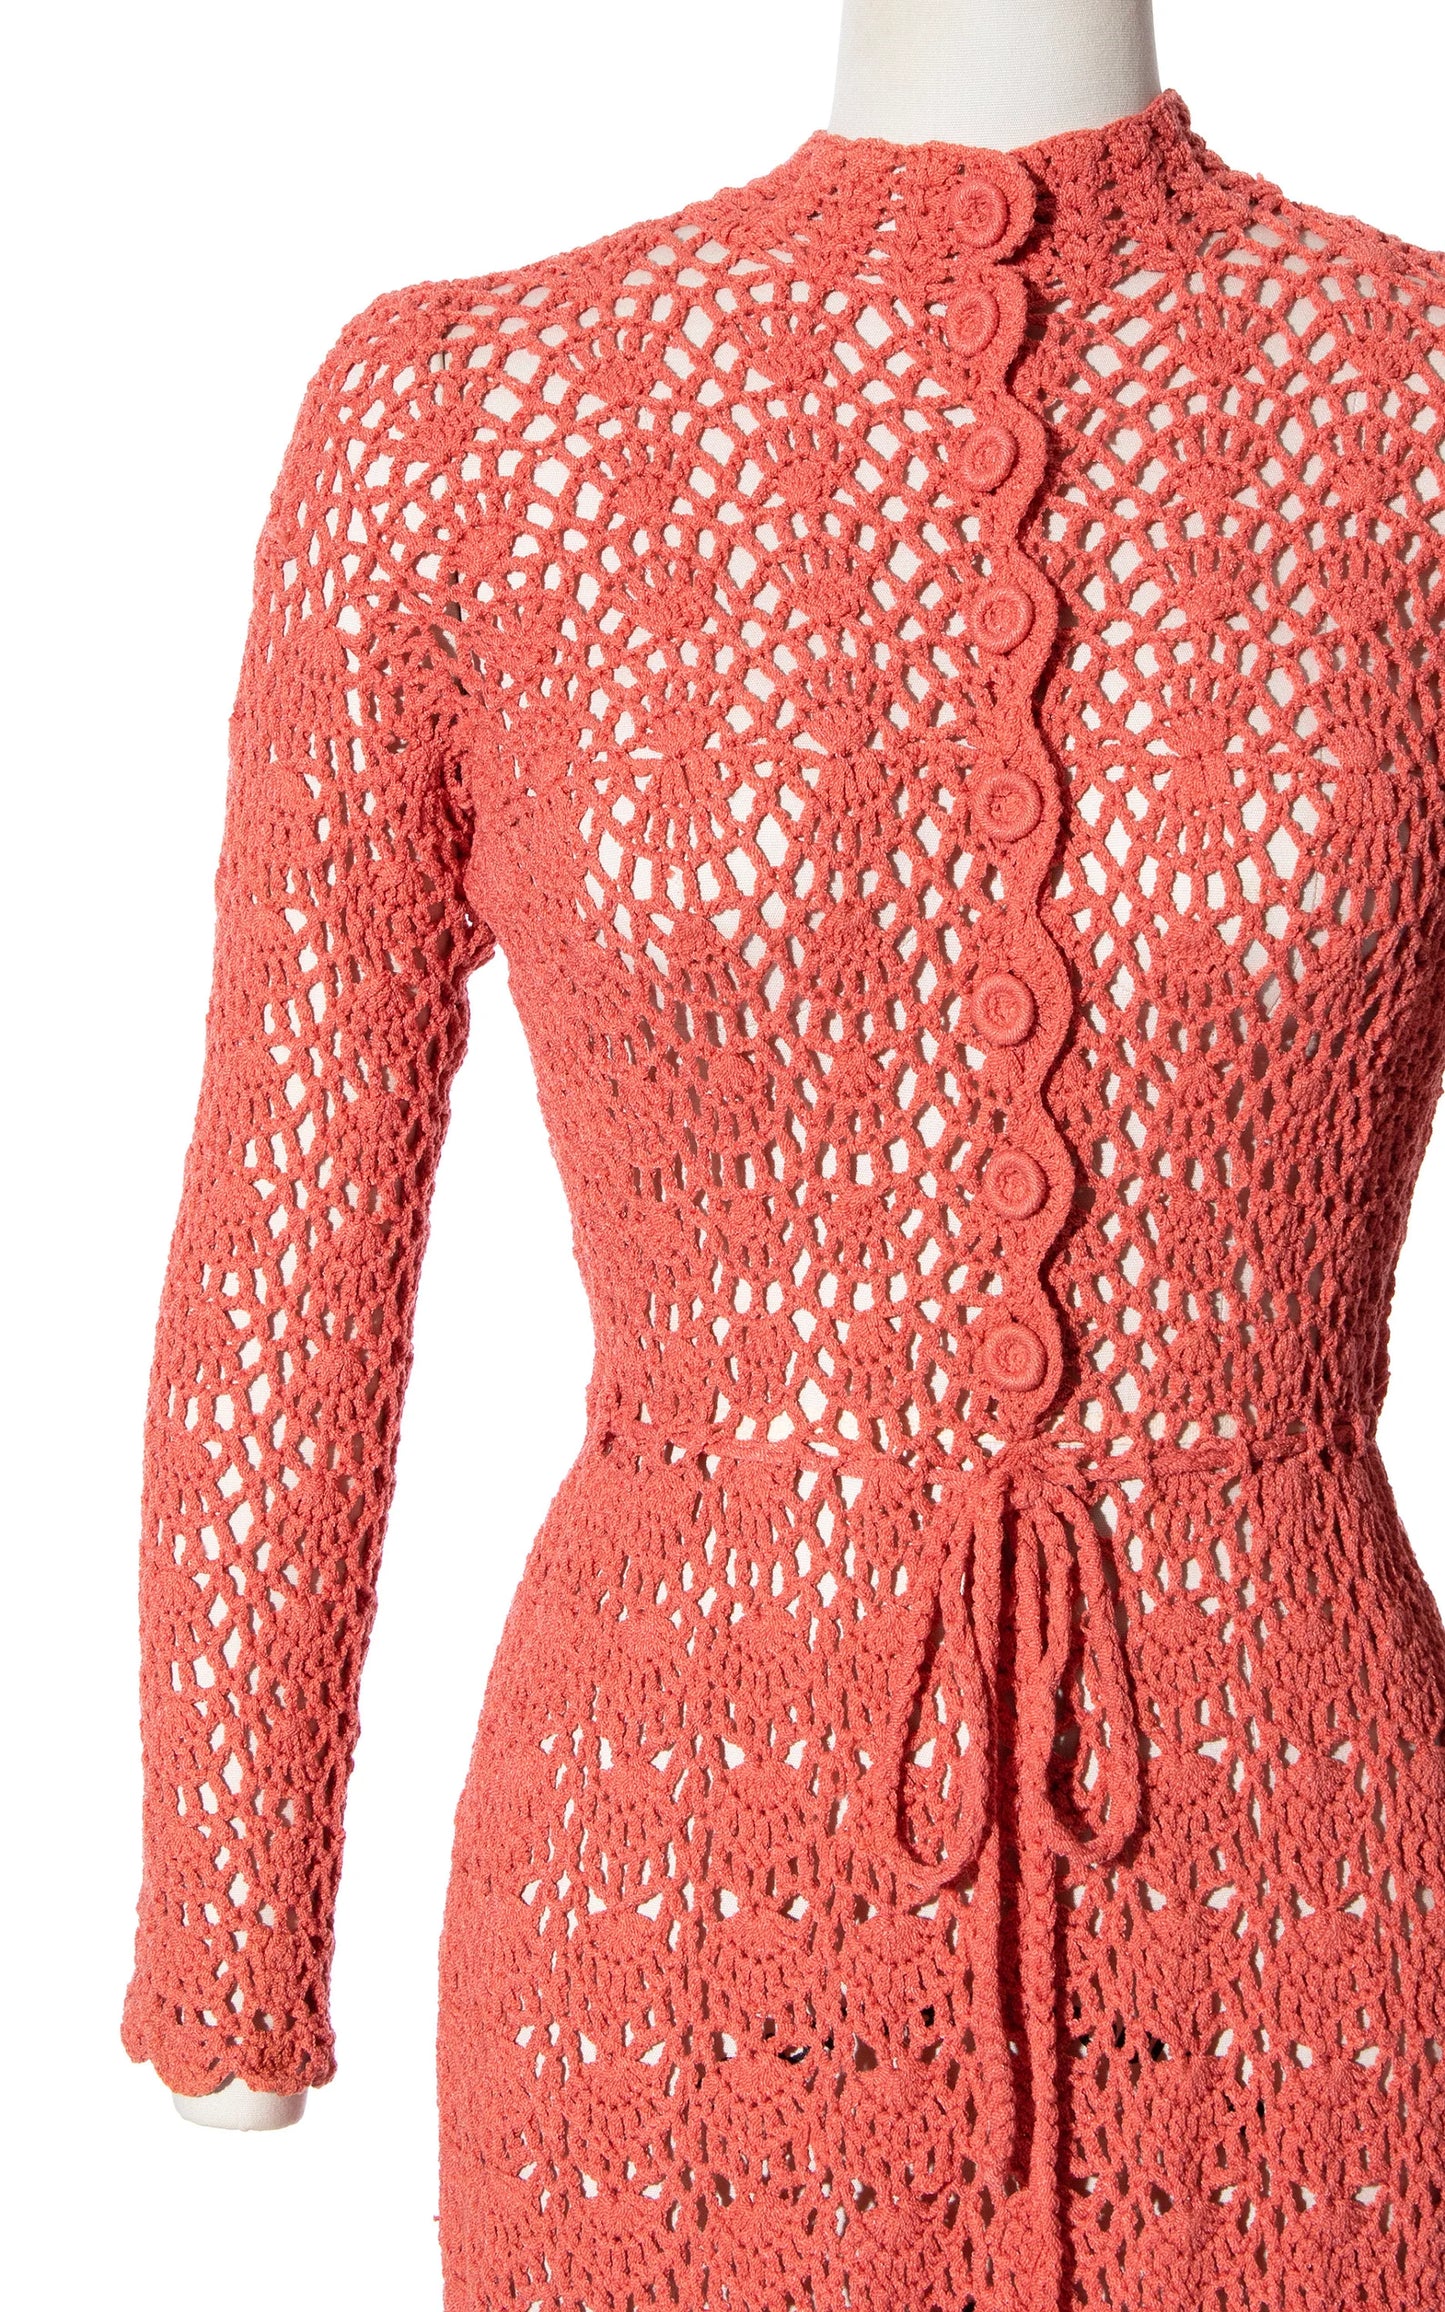 1970s Peach Crochet Sweater Dress | x-small/small/medium/large